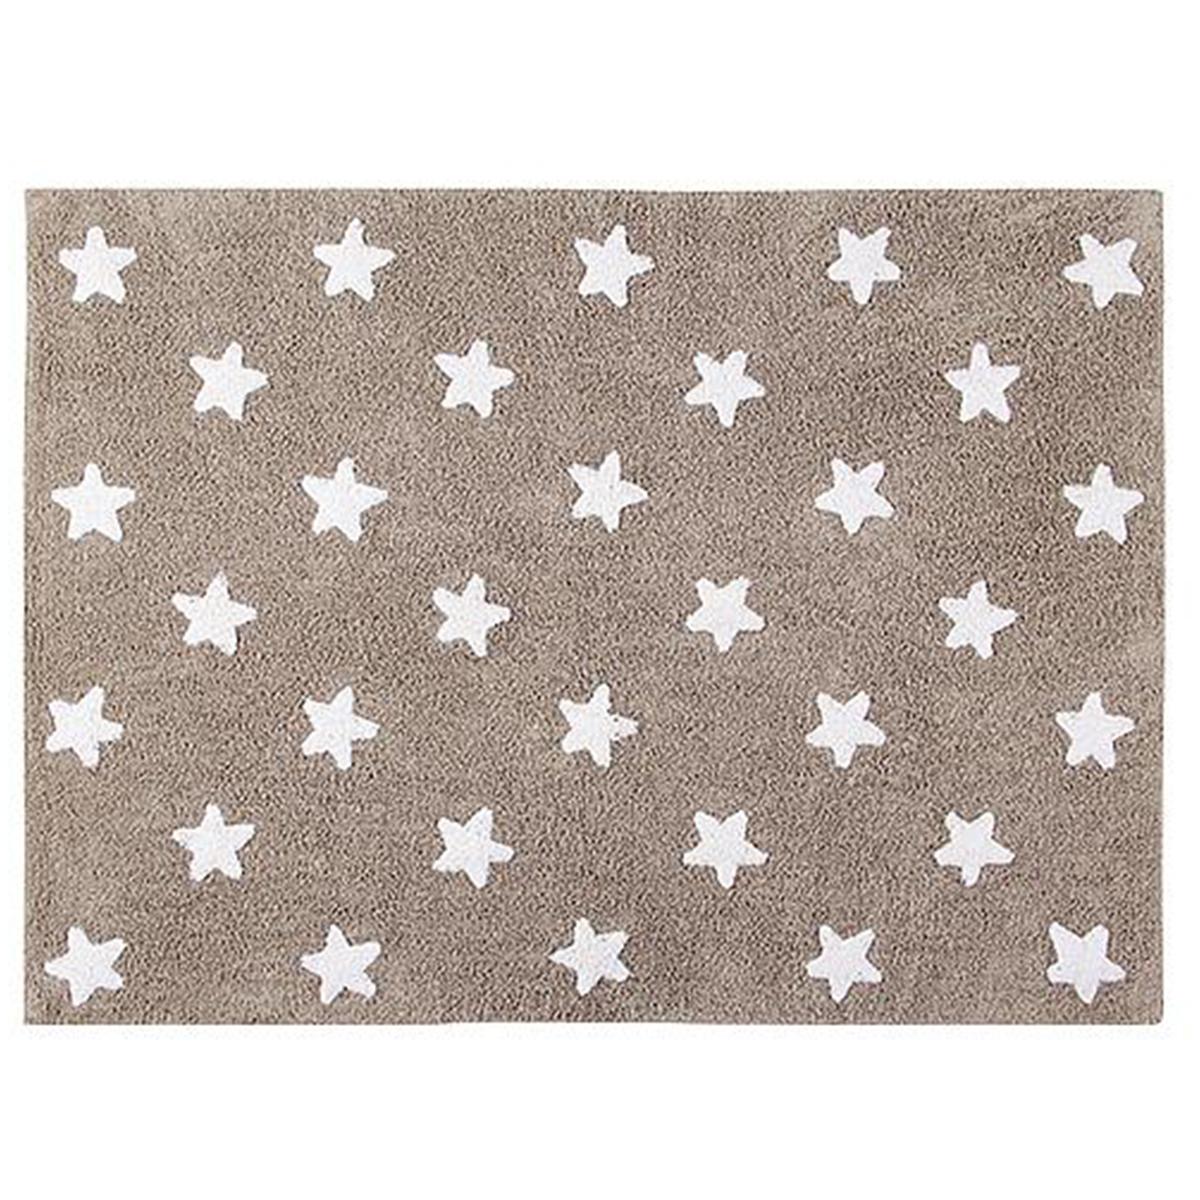 Tapis coton motif étoiles lin blanches 120x160